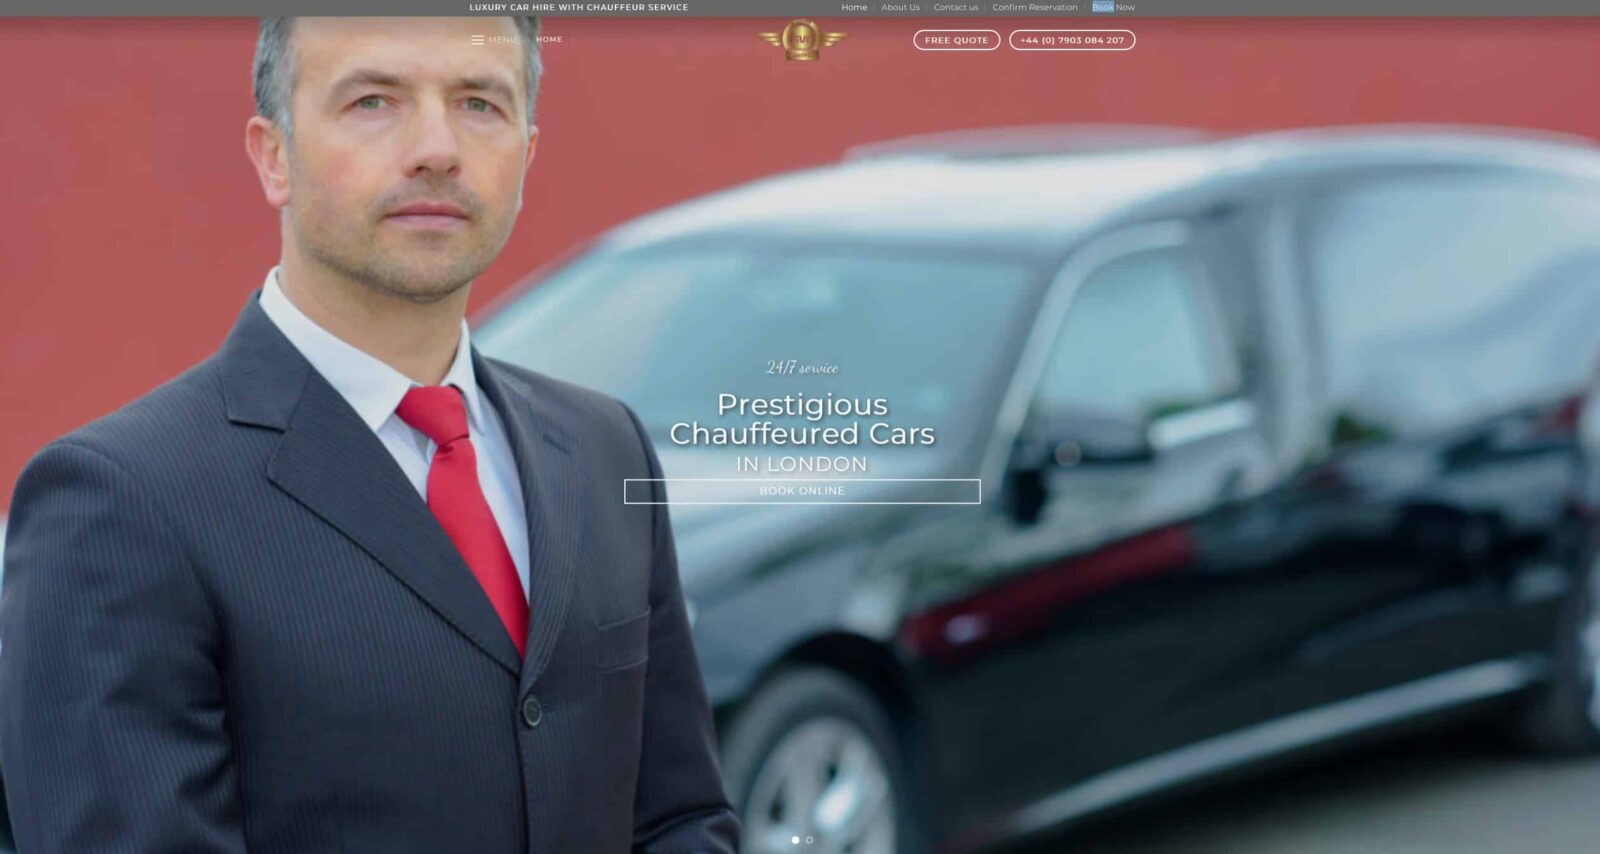 Car Hire Chauffeur Service Website Design